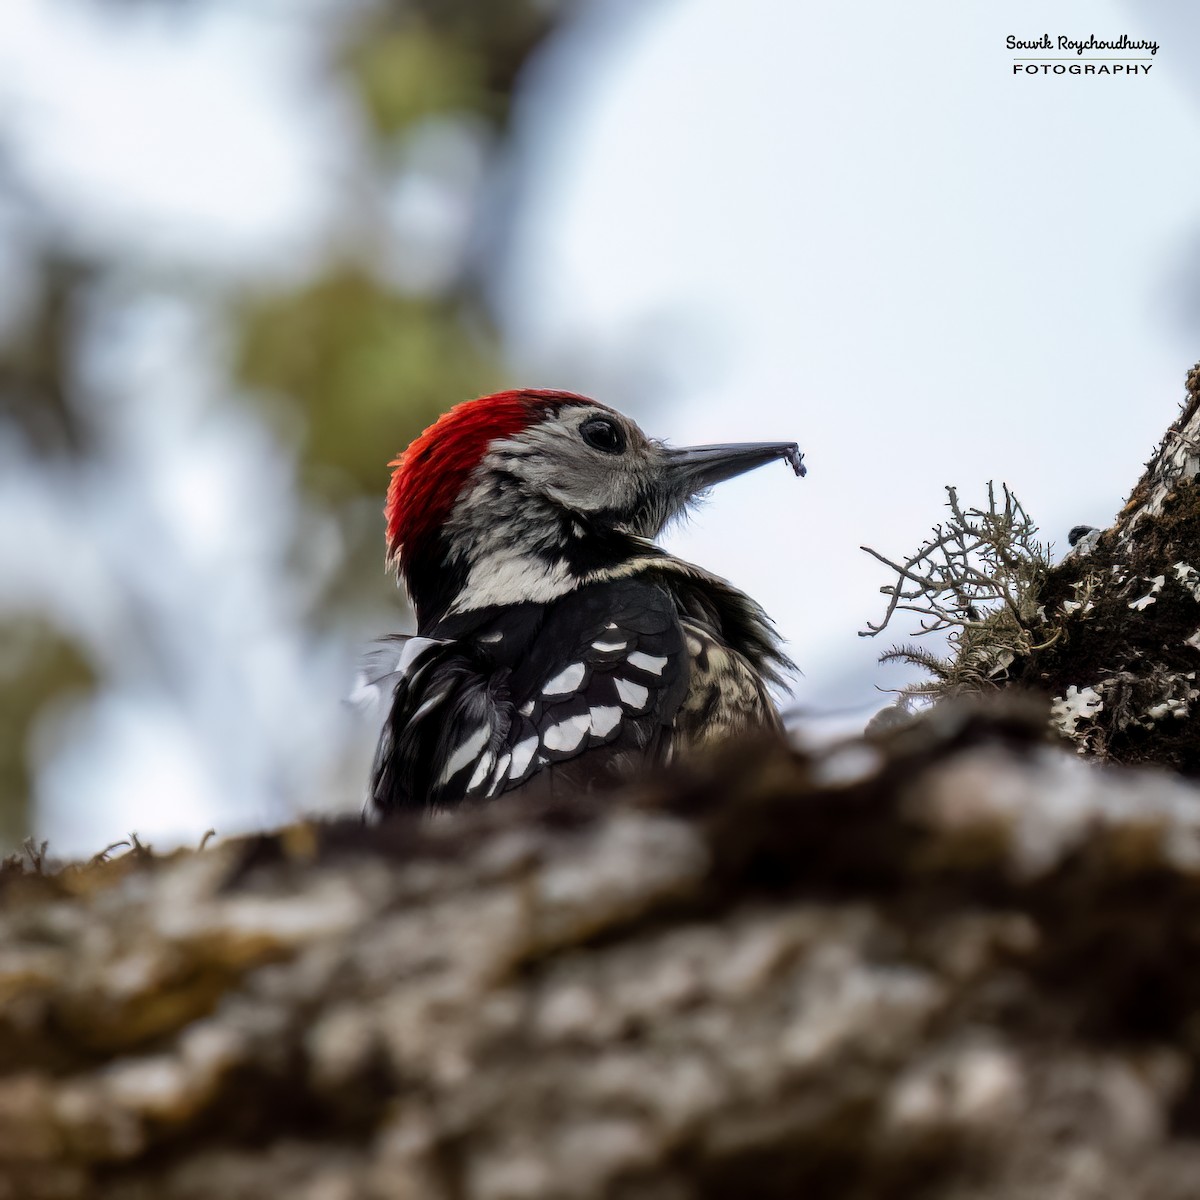 Stripe-breasted Woodpecker - Souvik Roychoudhury